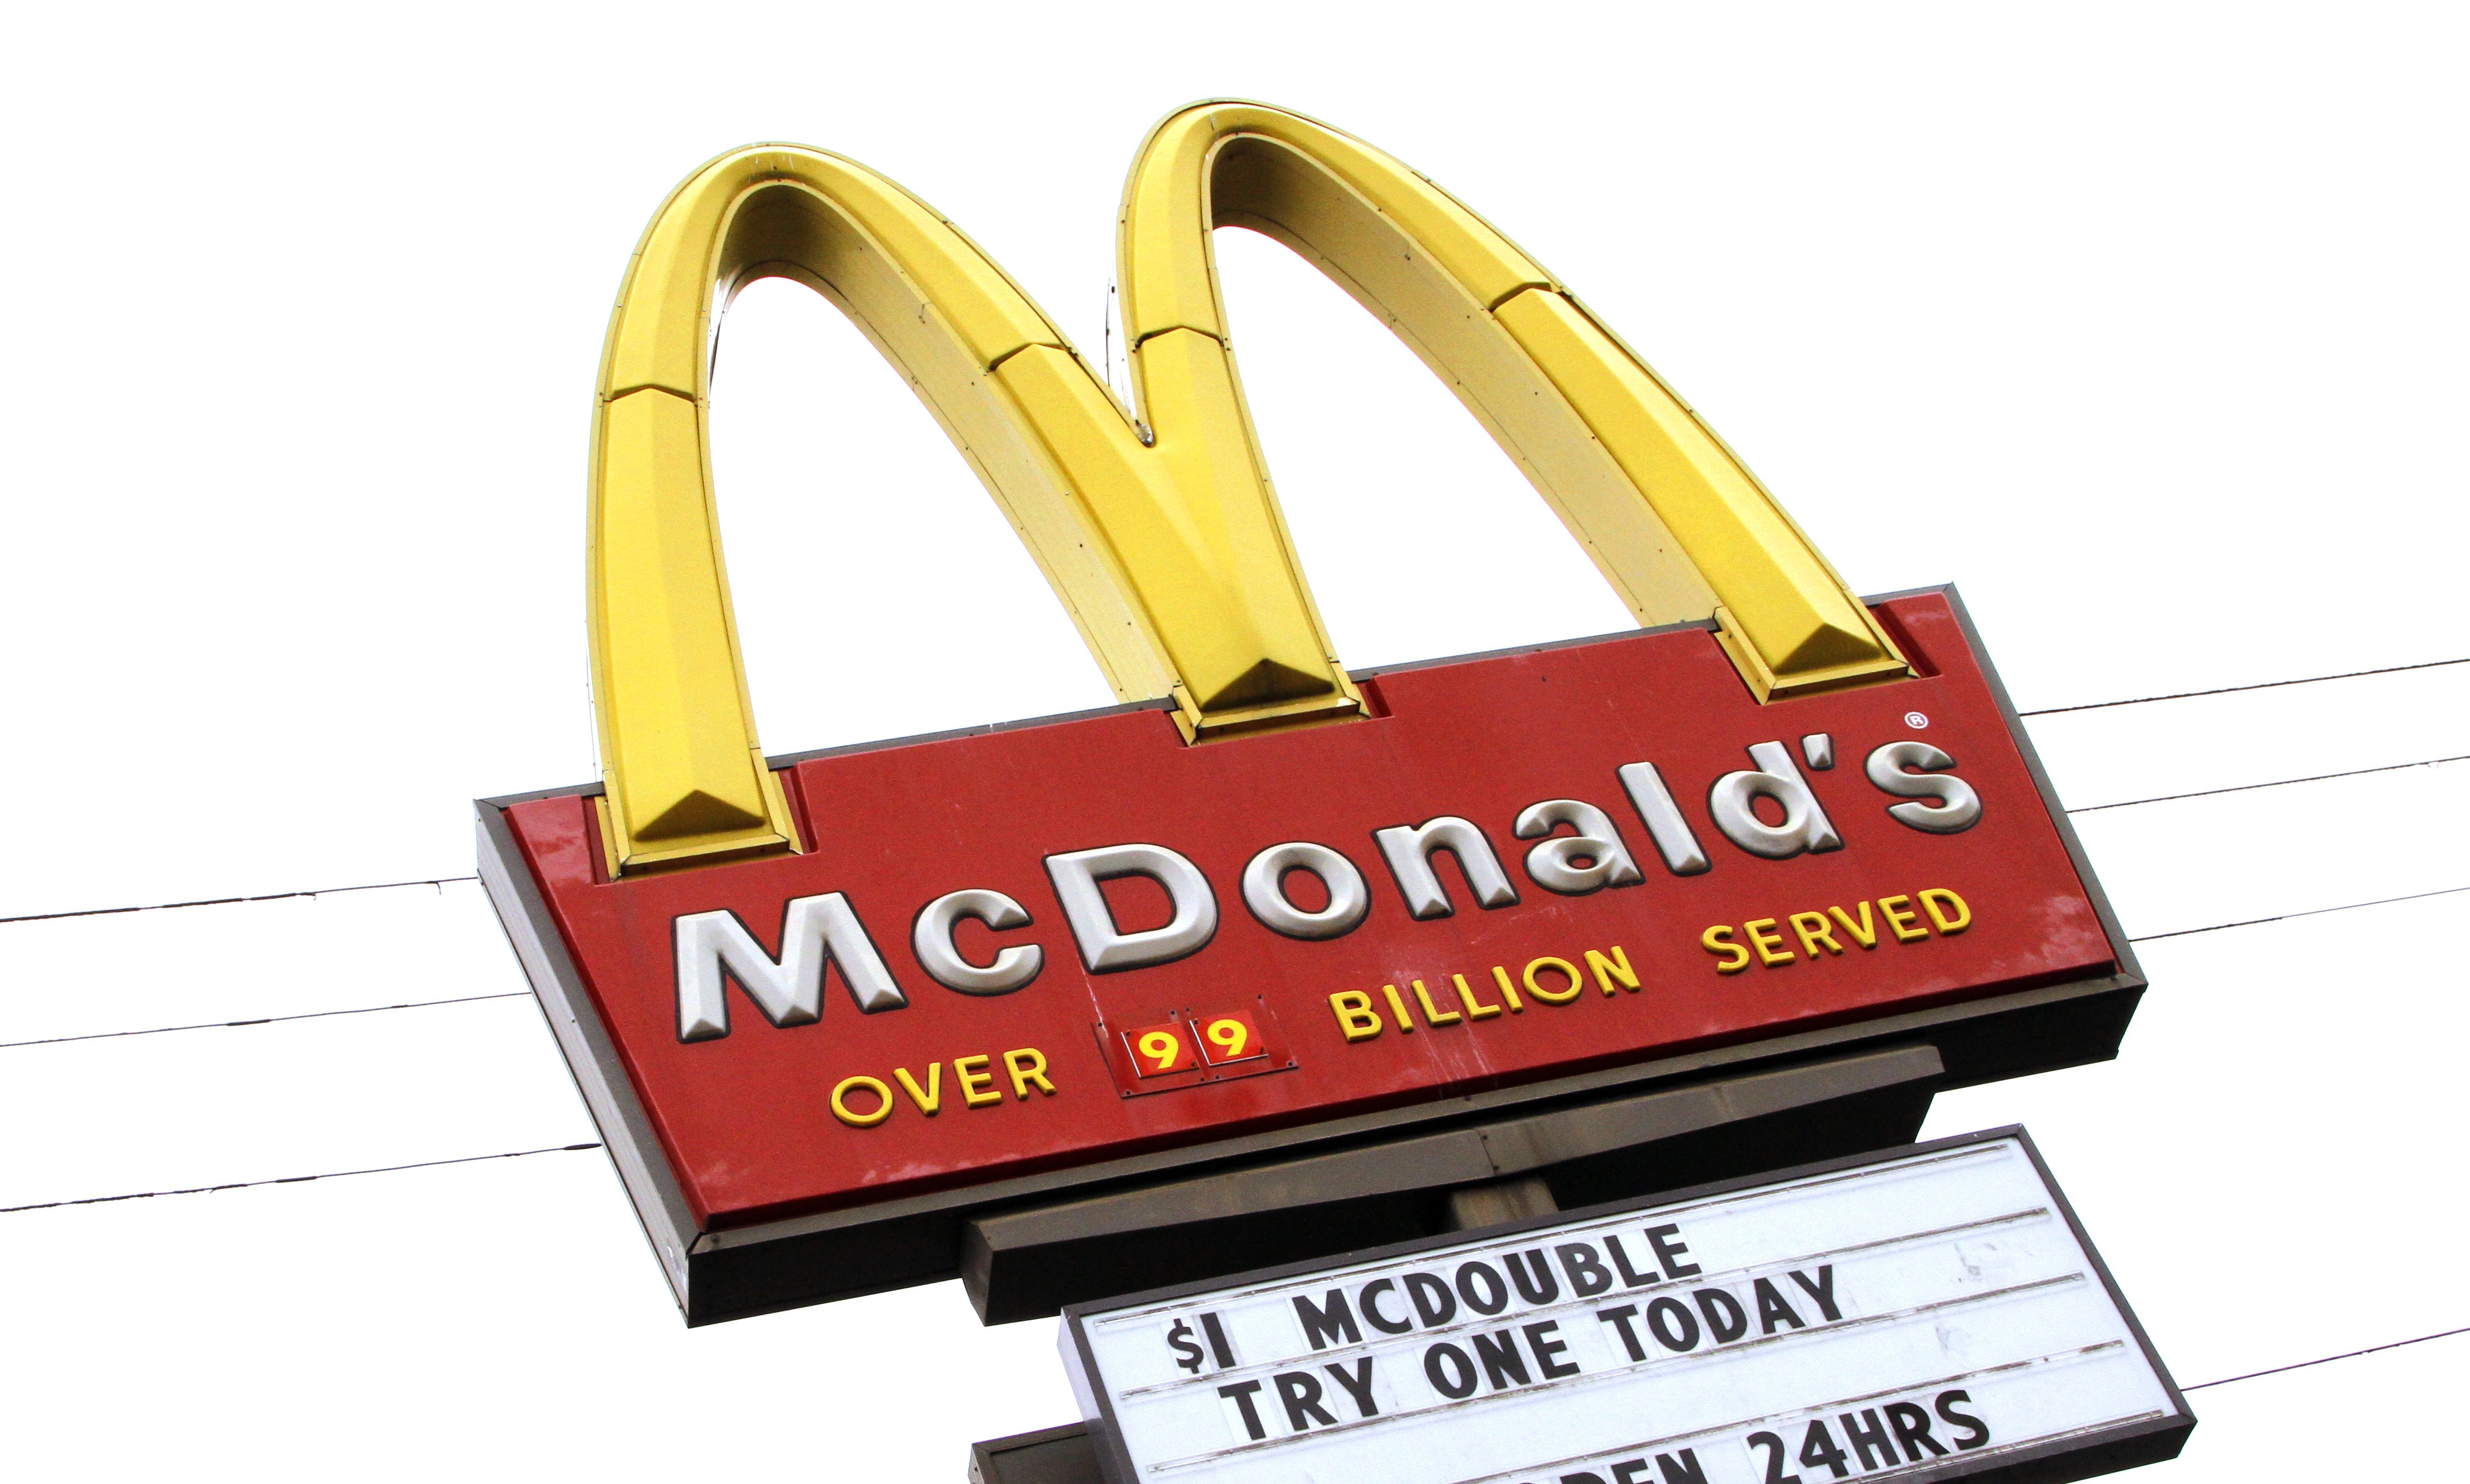 McDonalds, OS 2012, London, England